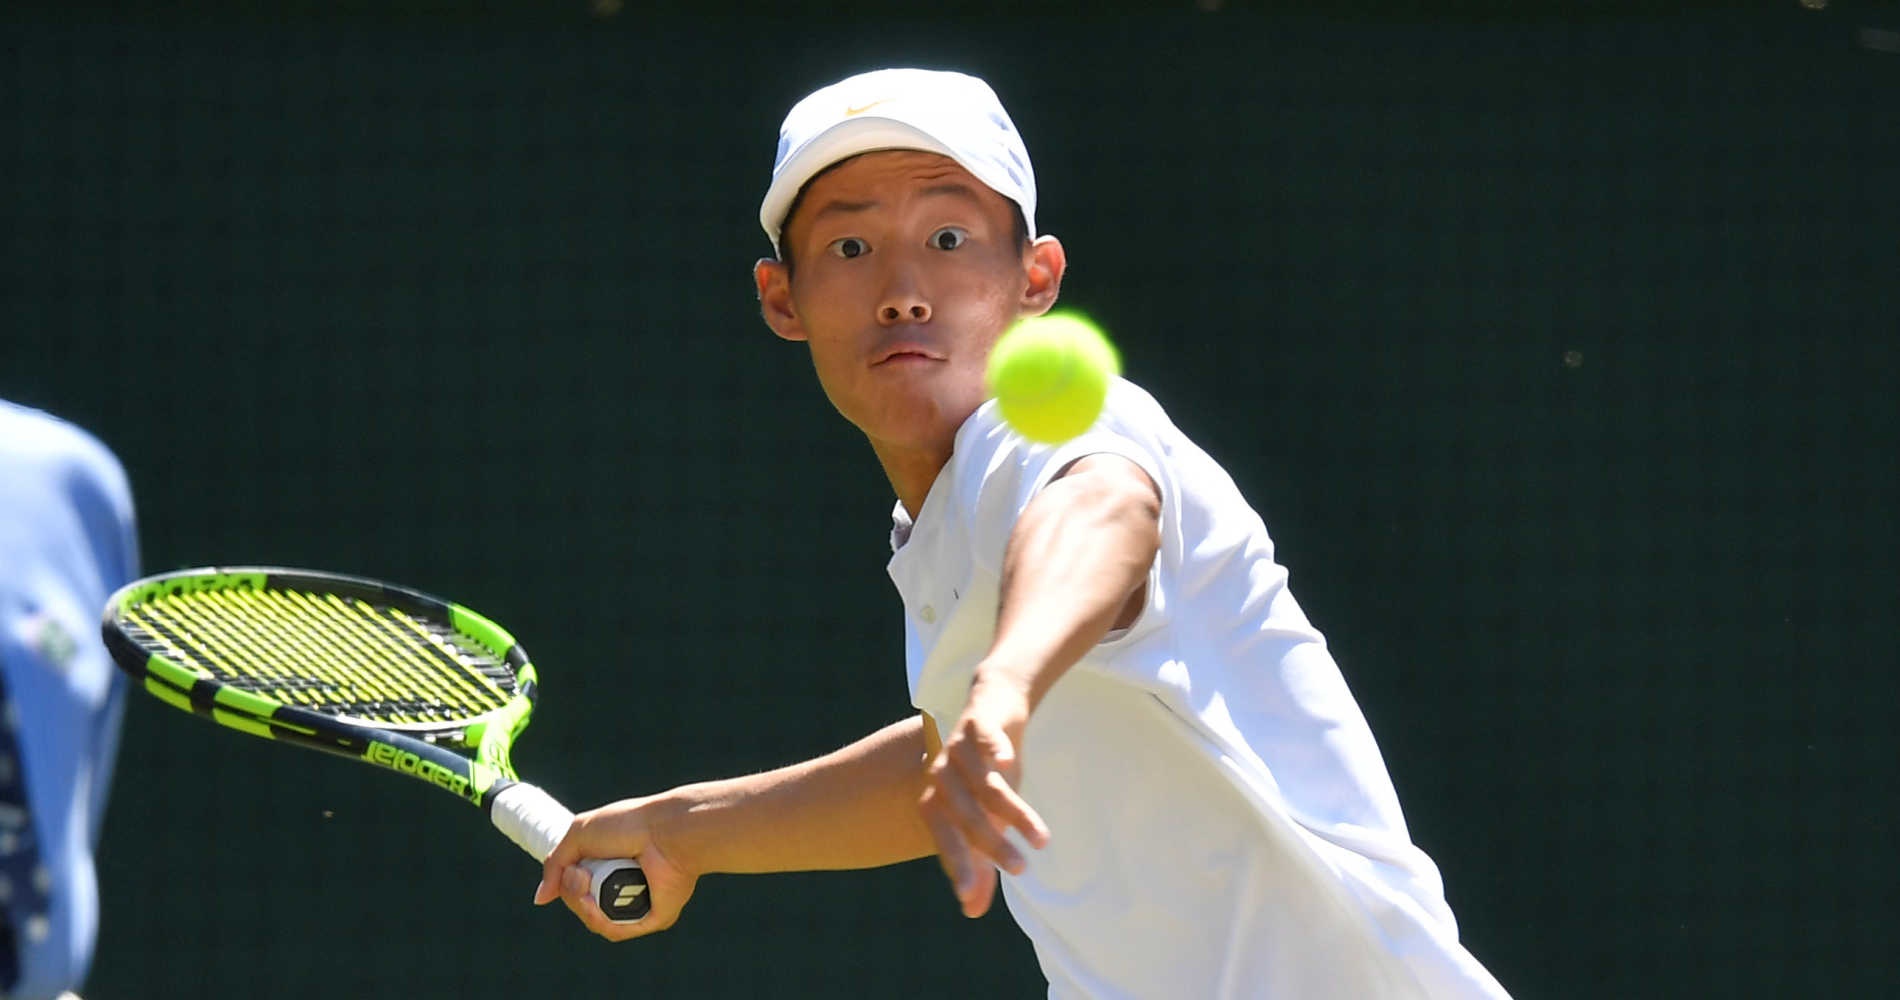 Tennis, ATP – Shanghai Masters 2023: Atmane defeats Thompson - Tennis Majors